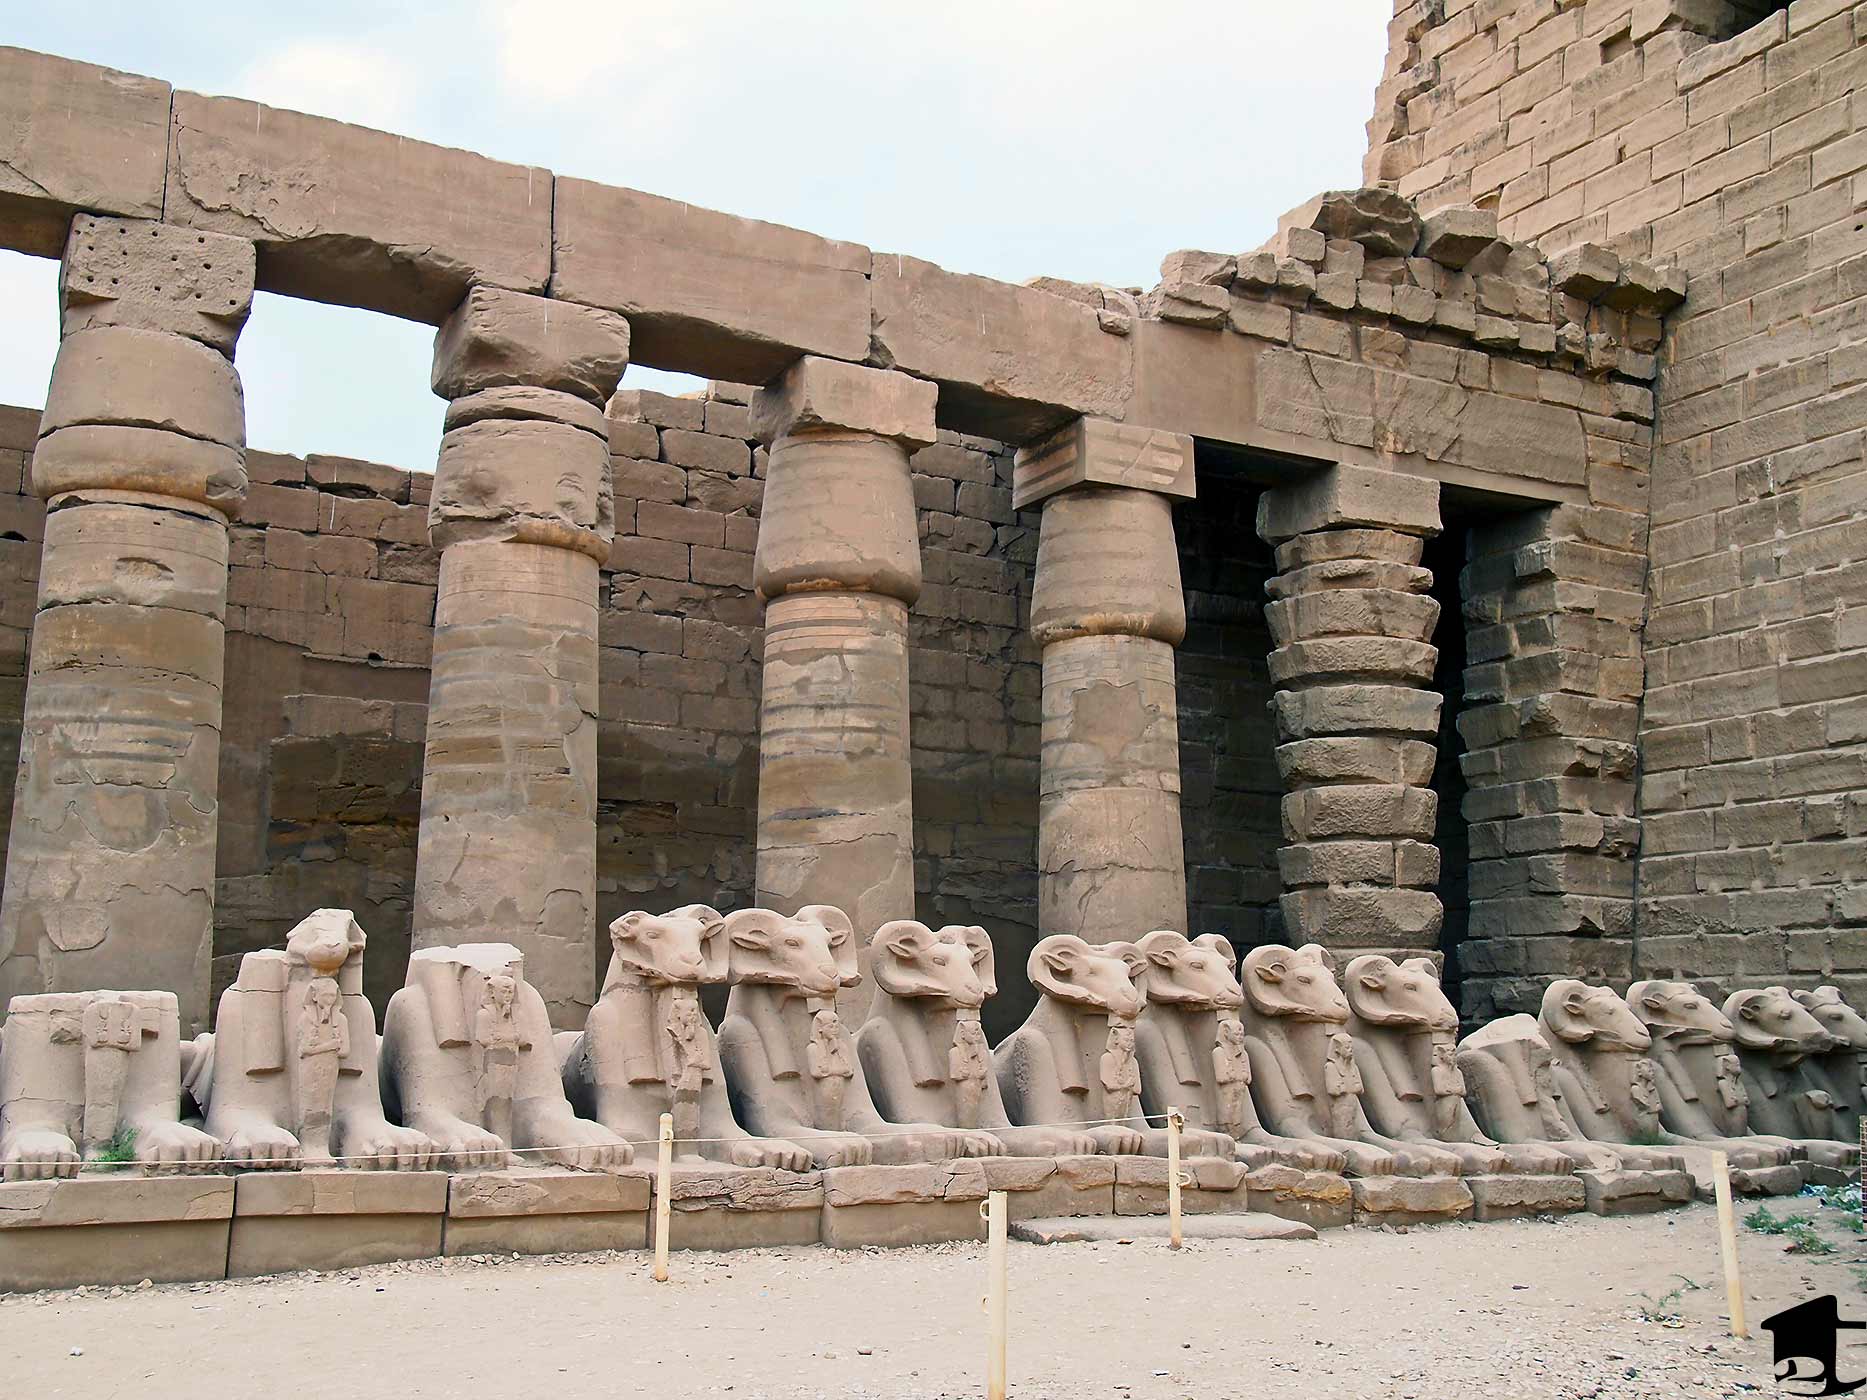 Pillars and statues at Karnak